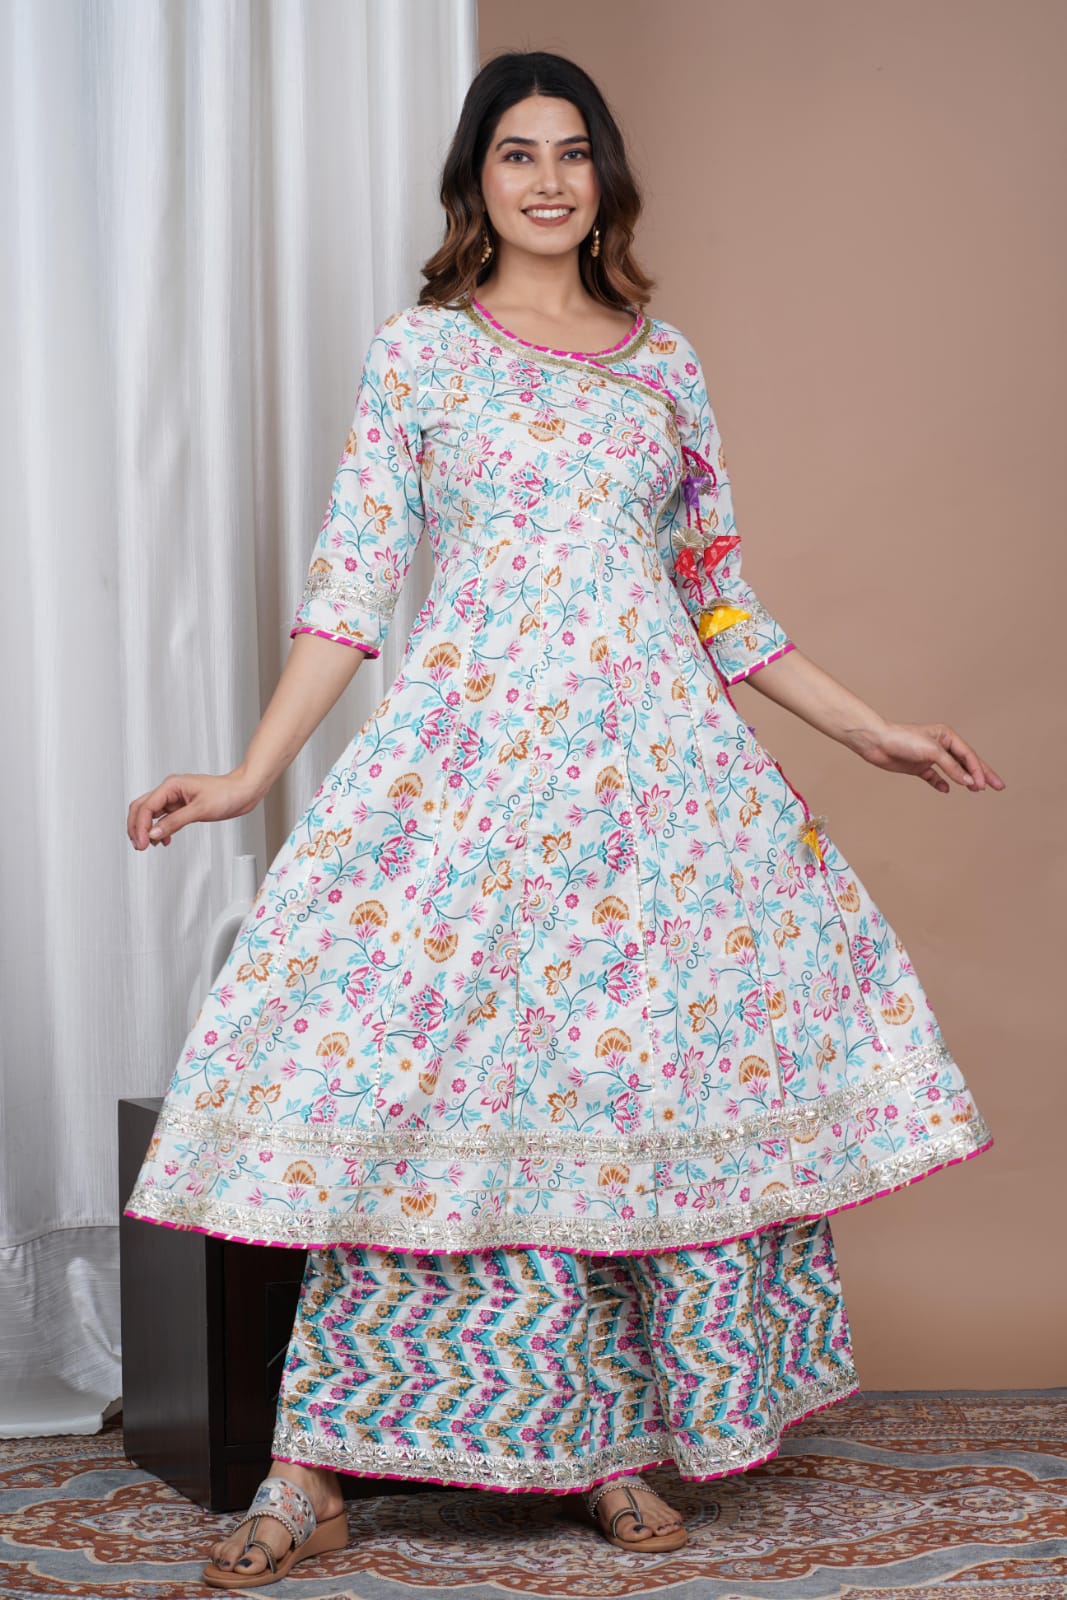 Indian Women Multi Color Cotton Anarkali Flared Kurta Kurti Long Dress Top  Tunic | eBay